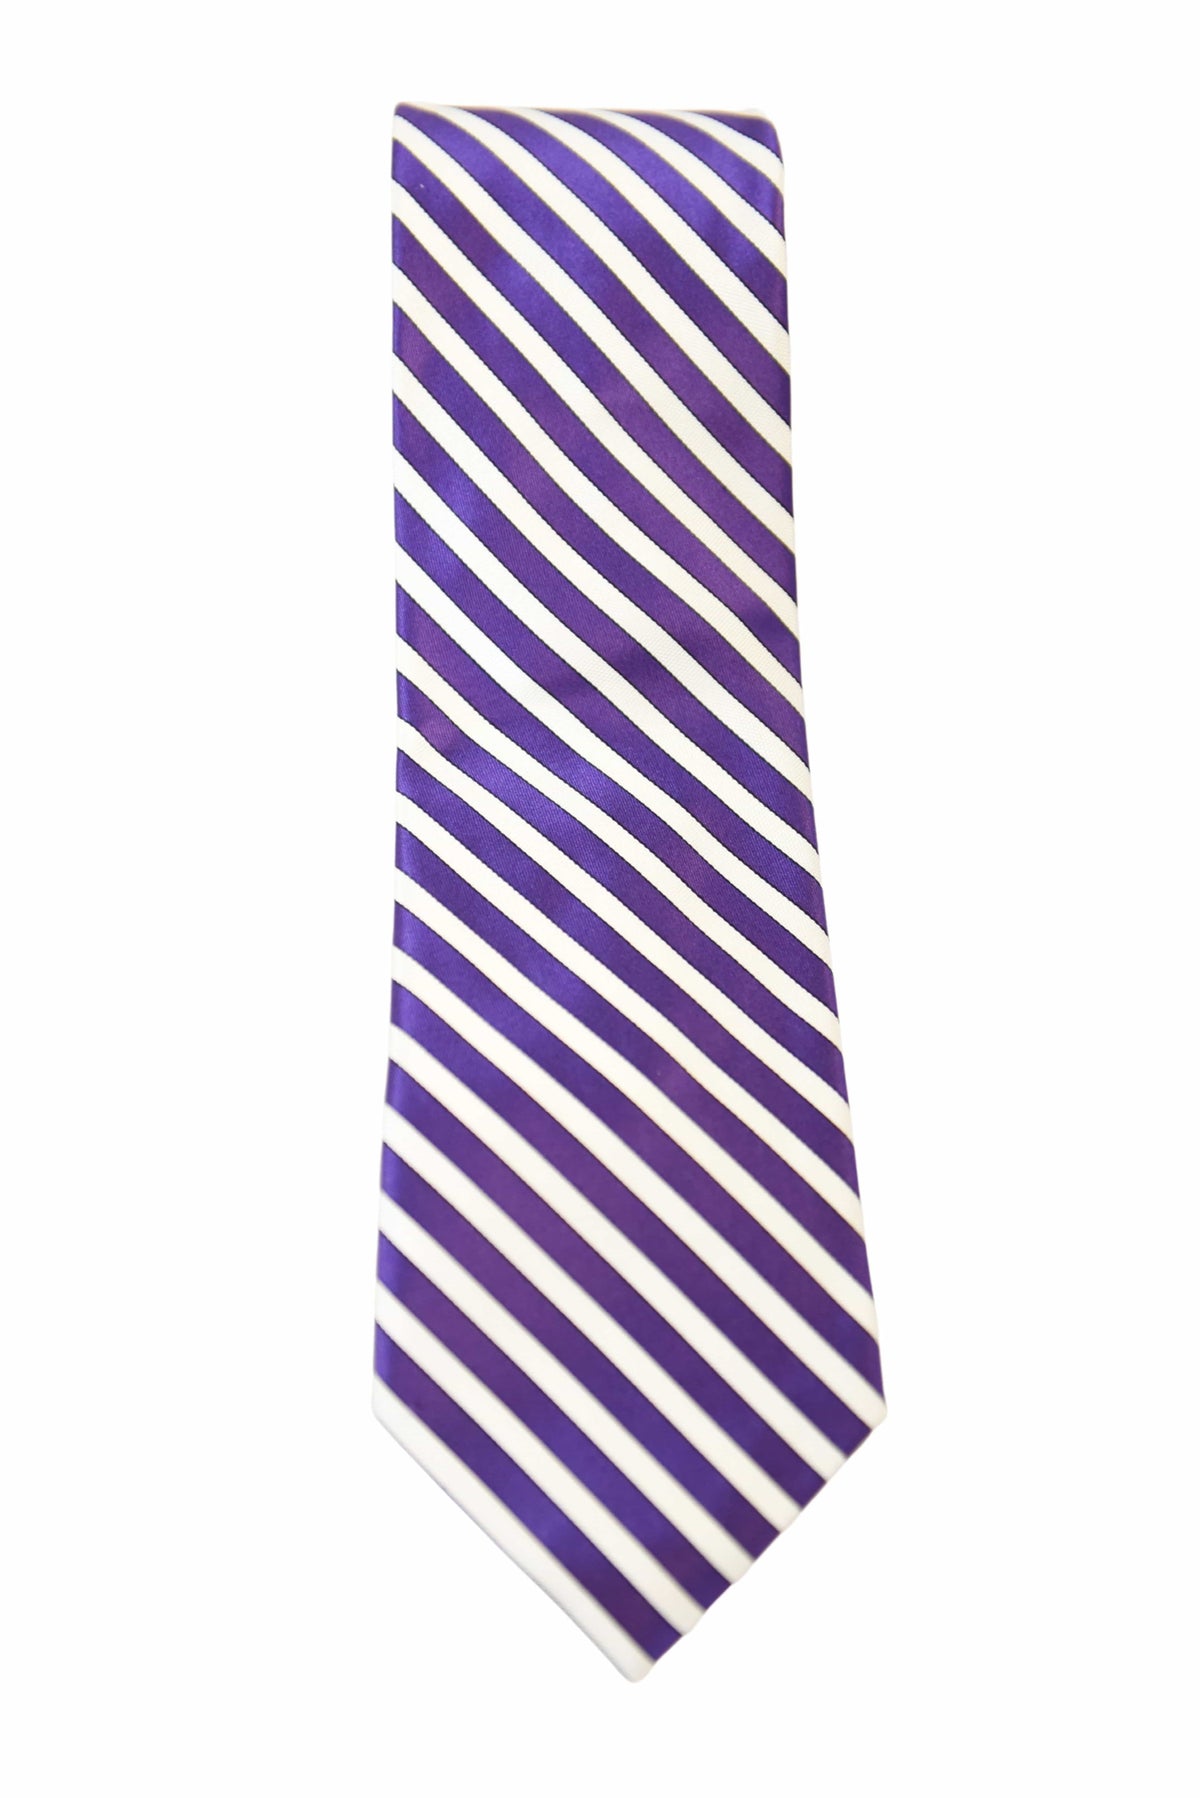 The Suit Depot Arthur Black Premium Silk Tie